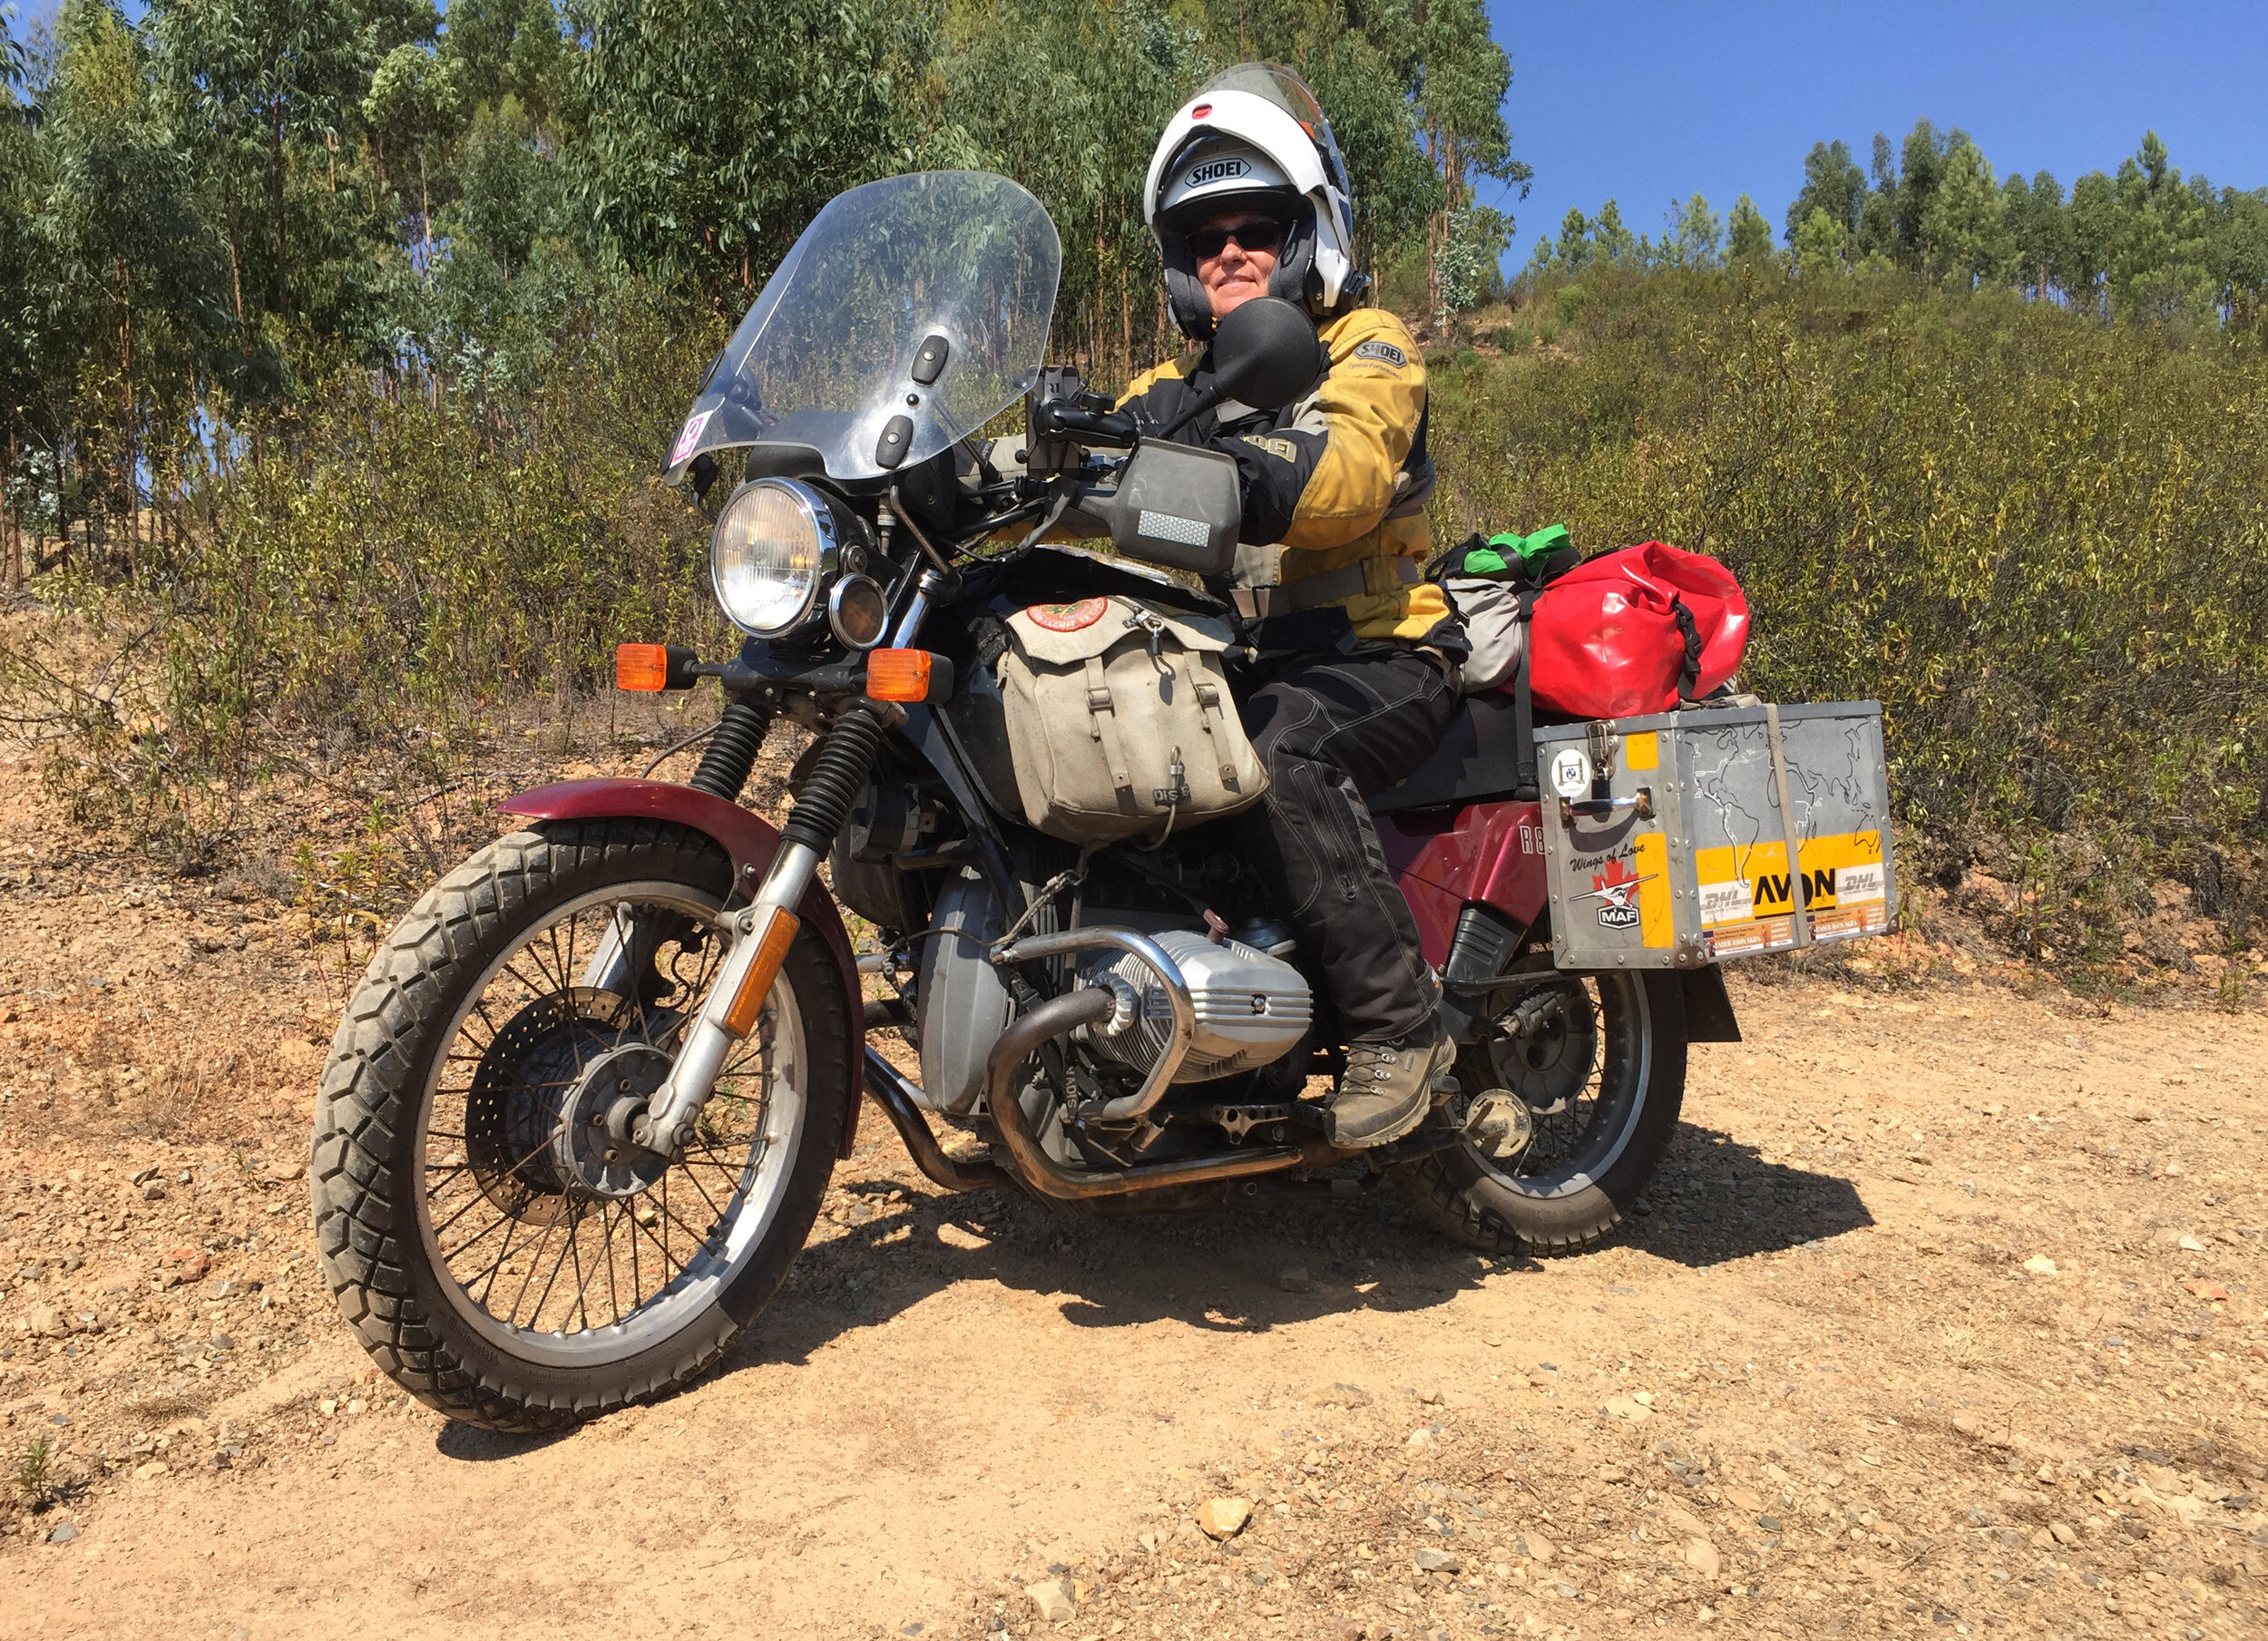 Sam_Manicom_Adventure_Rider_Radio_Motorcycle_Podcast_Birgit_Portugal.jpg